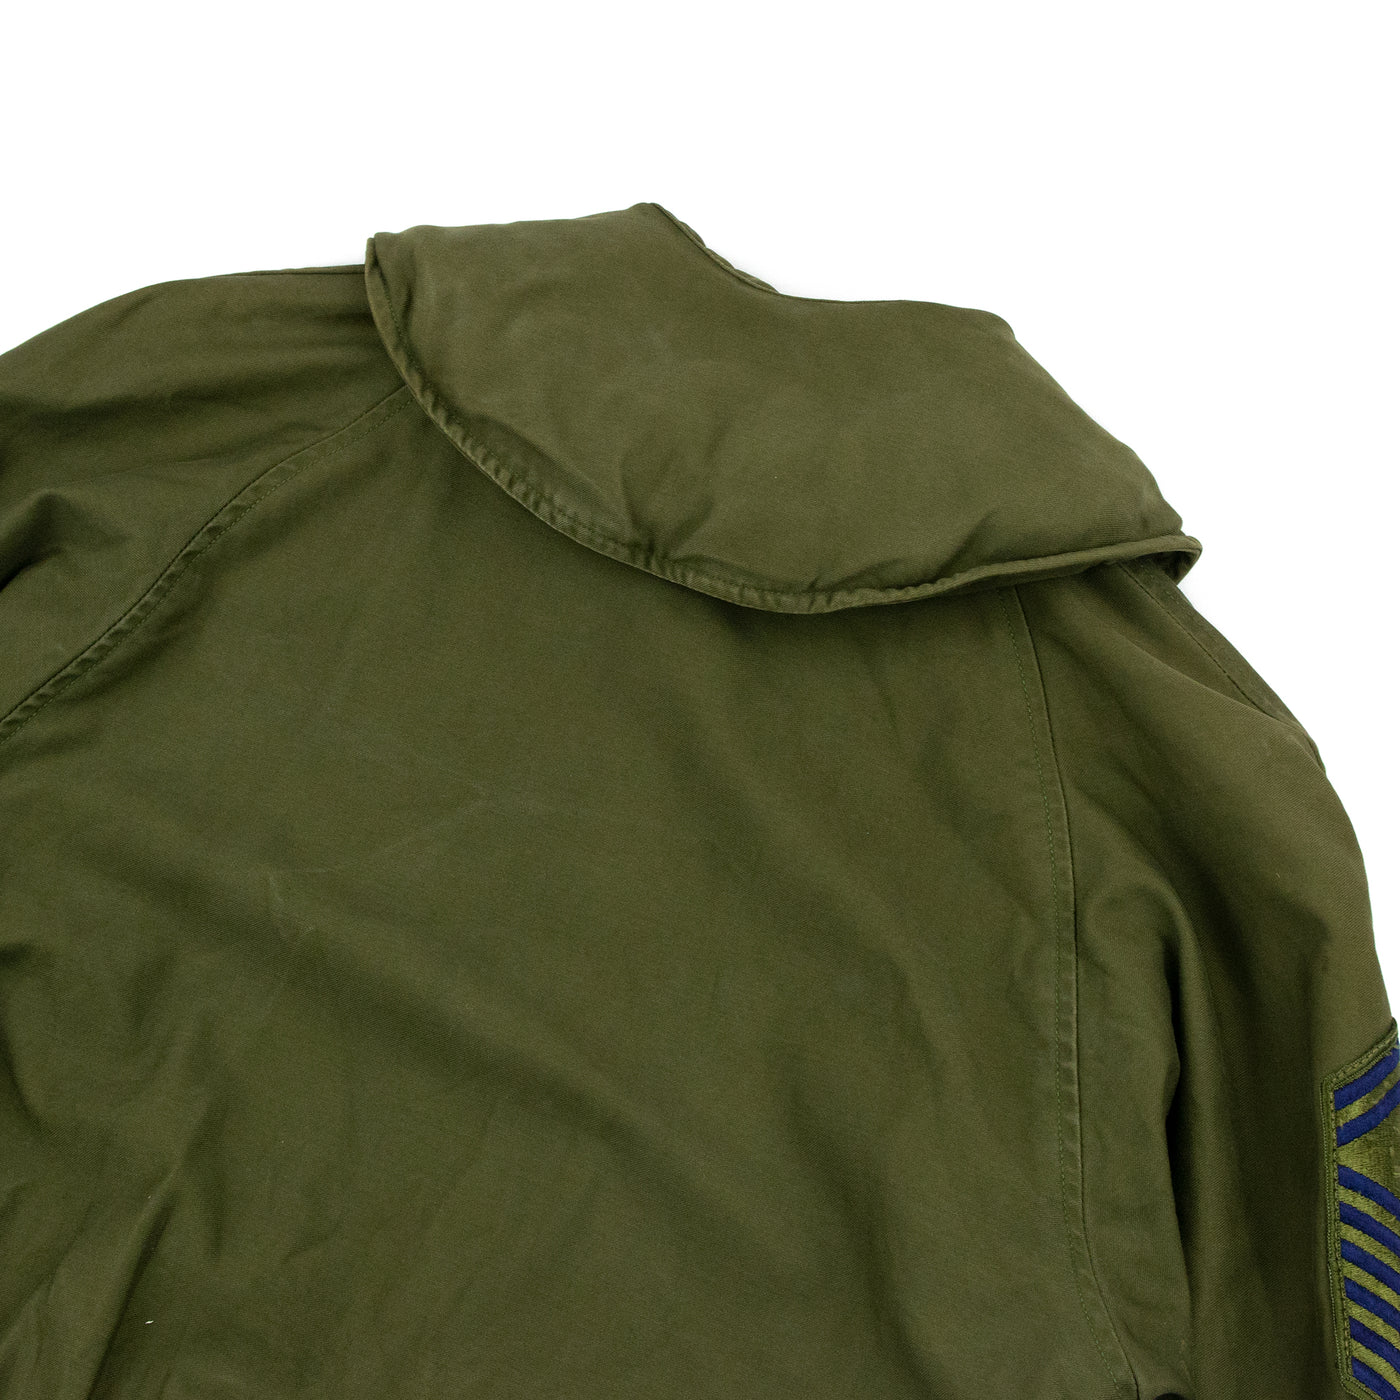 Vintage 1960s Vietnam USAF Military Cotton Sateen Field Jacket - S Back